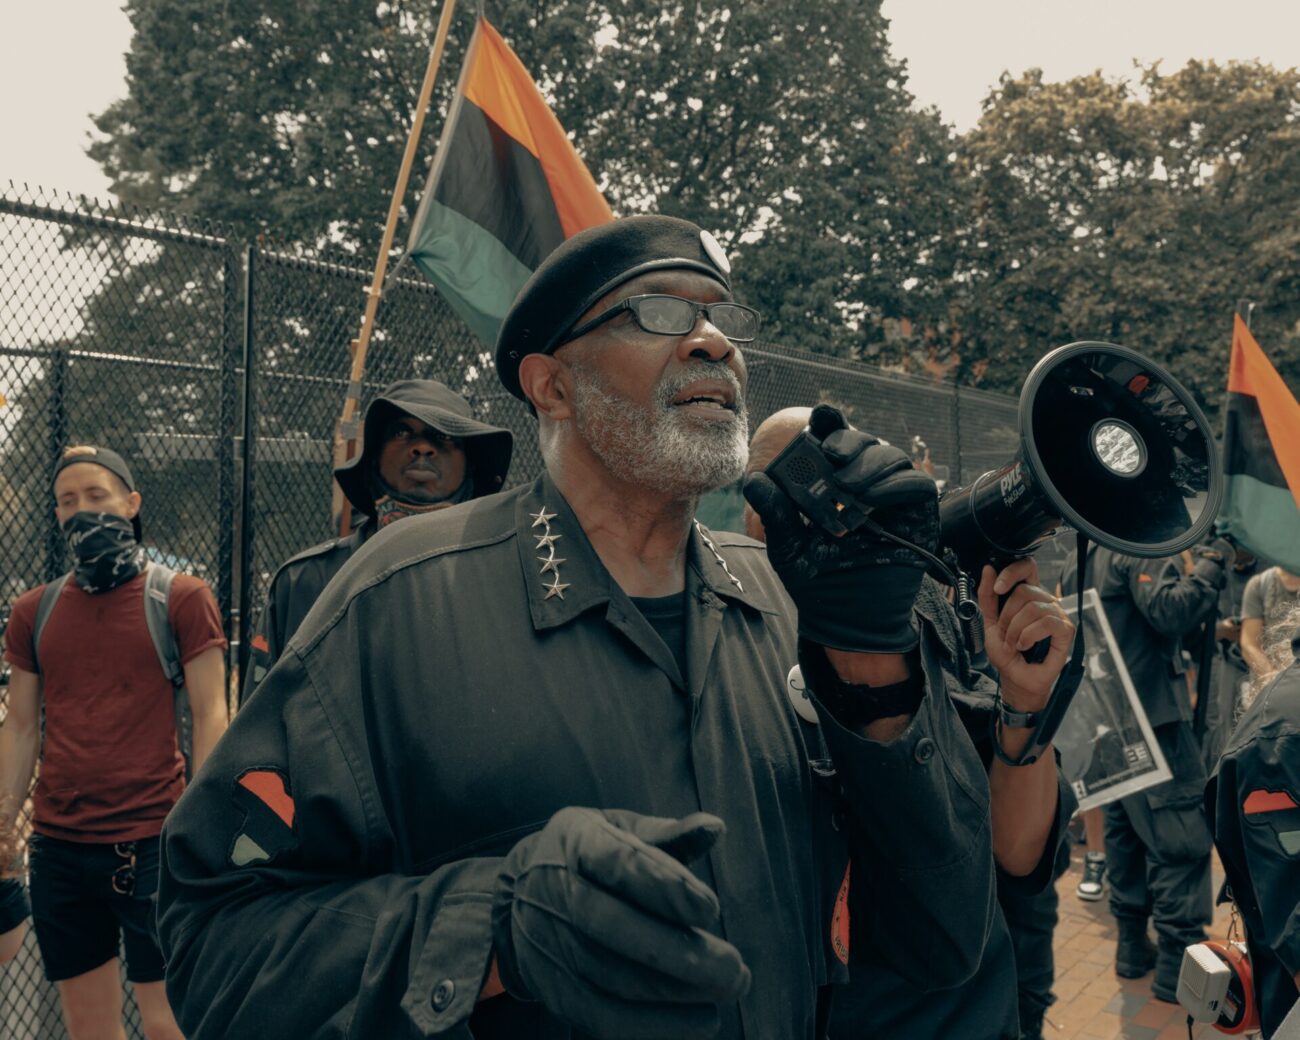 Moderne Black Panthers bij een Black Lives Matter demonstratie in Washington, juni 2020.